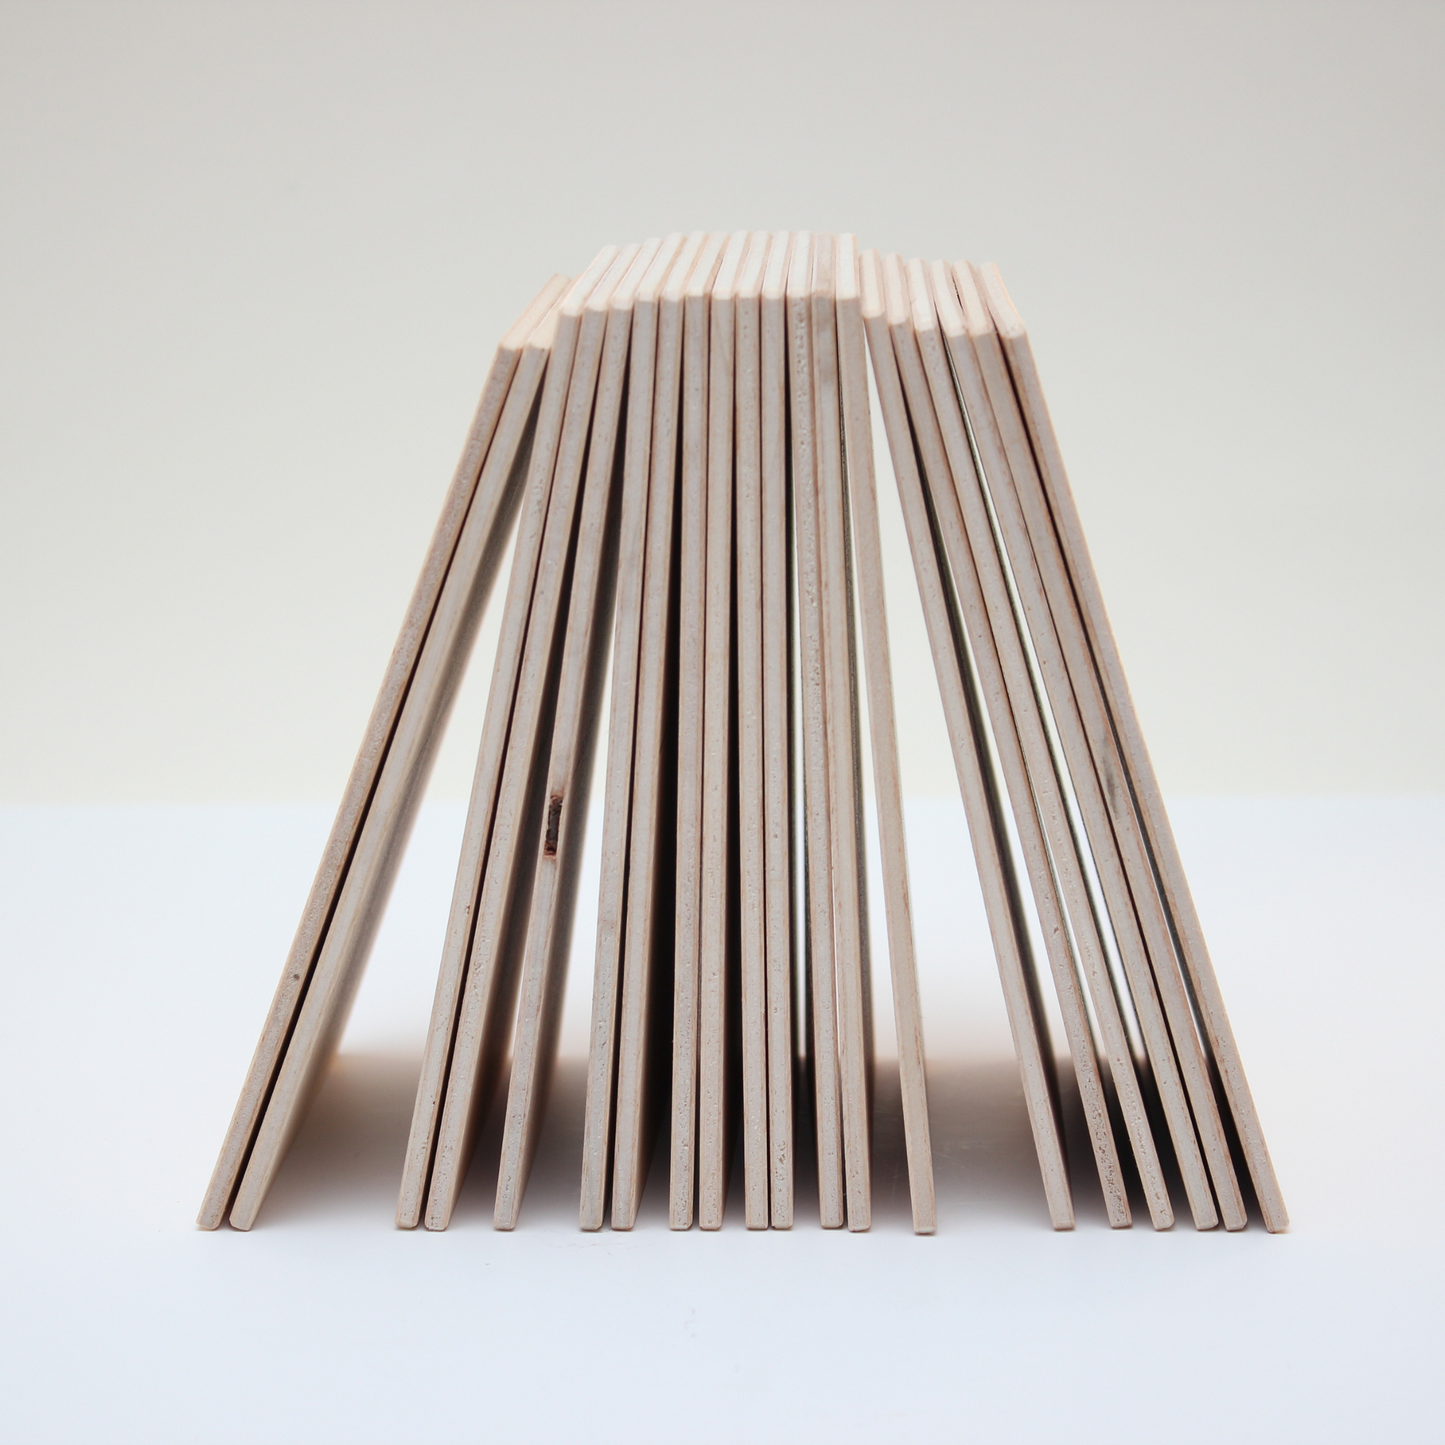 Holzpostkarte, Linoldruck, Partydog (14,7x10,5cm) - S'MADL MACHT'S